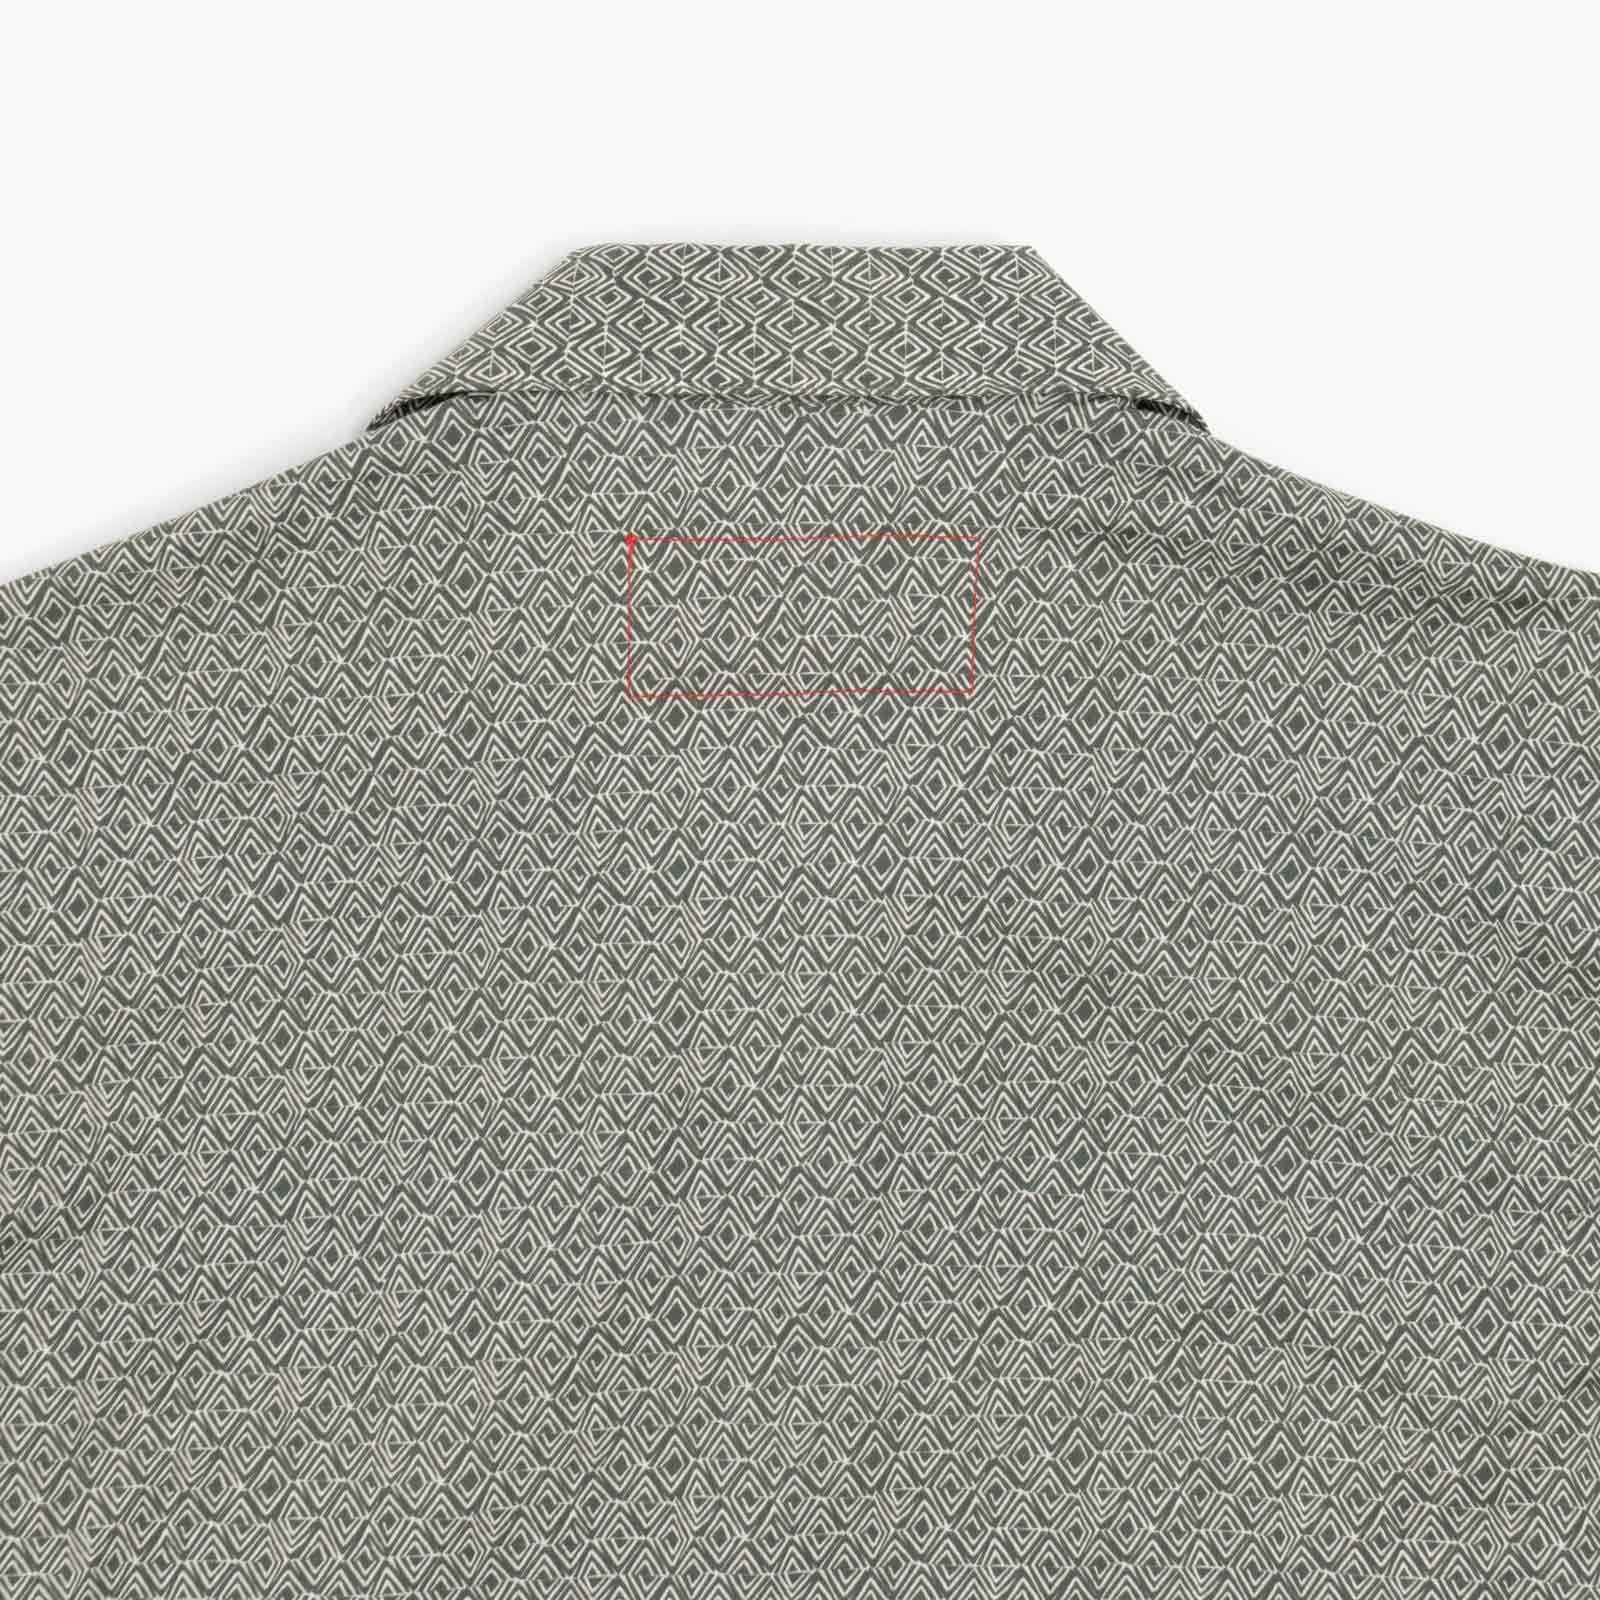 Short-sleeved shirt - Green geometric print